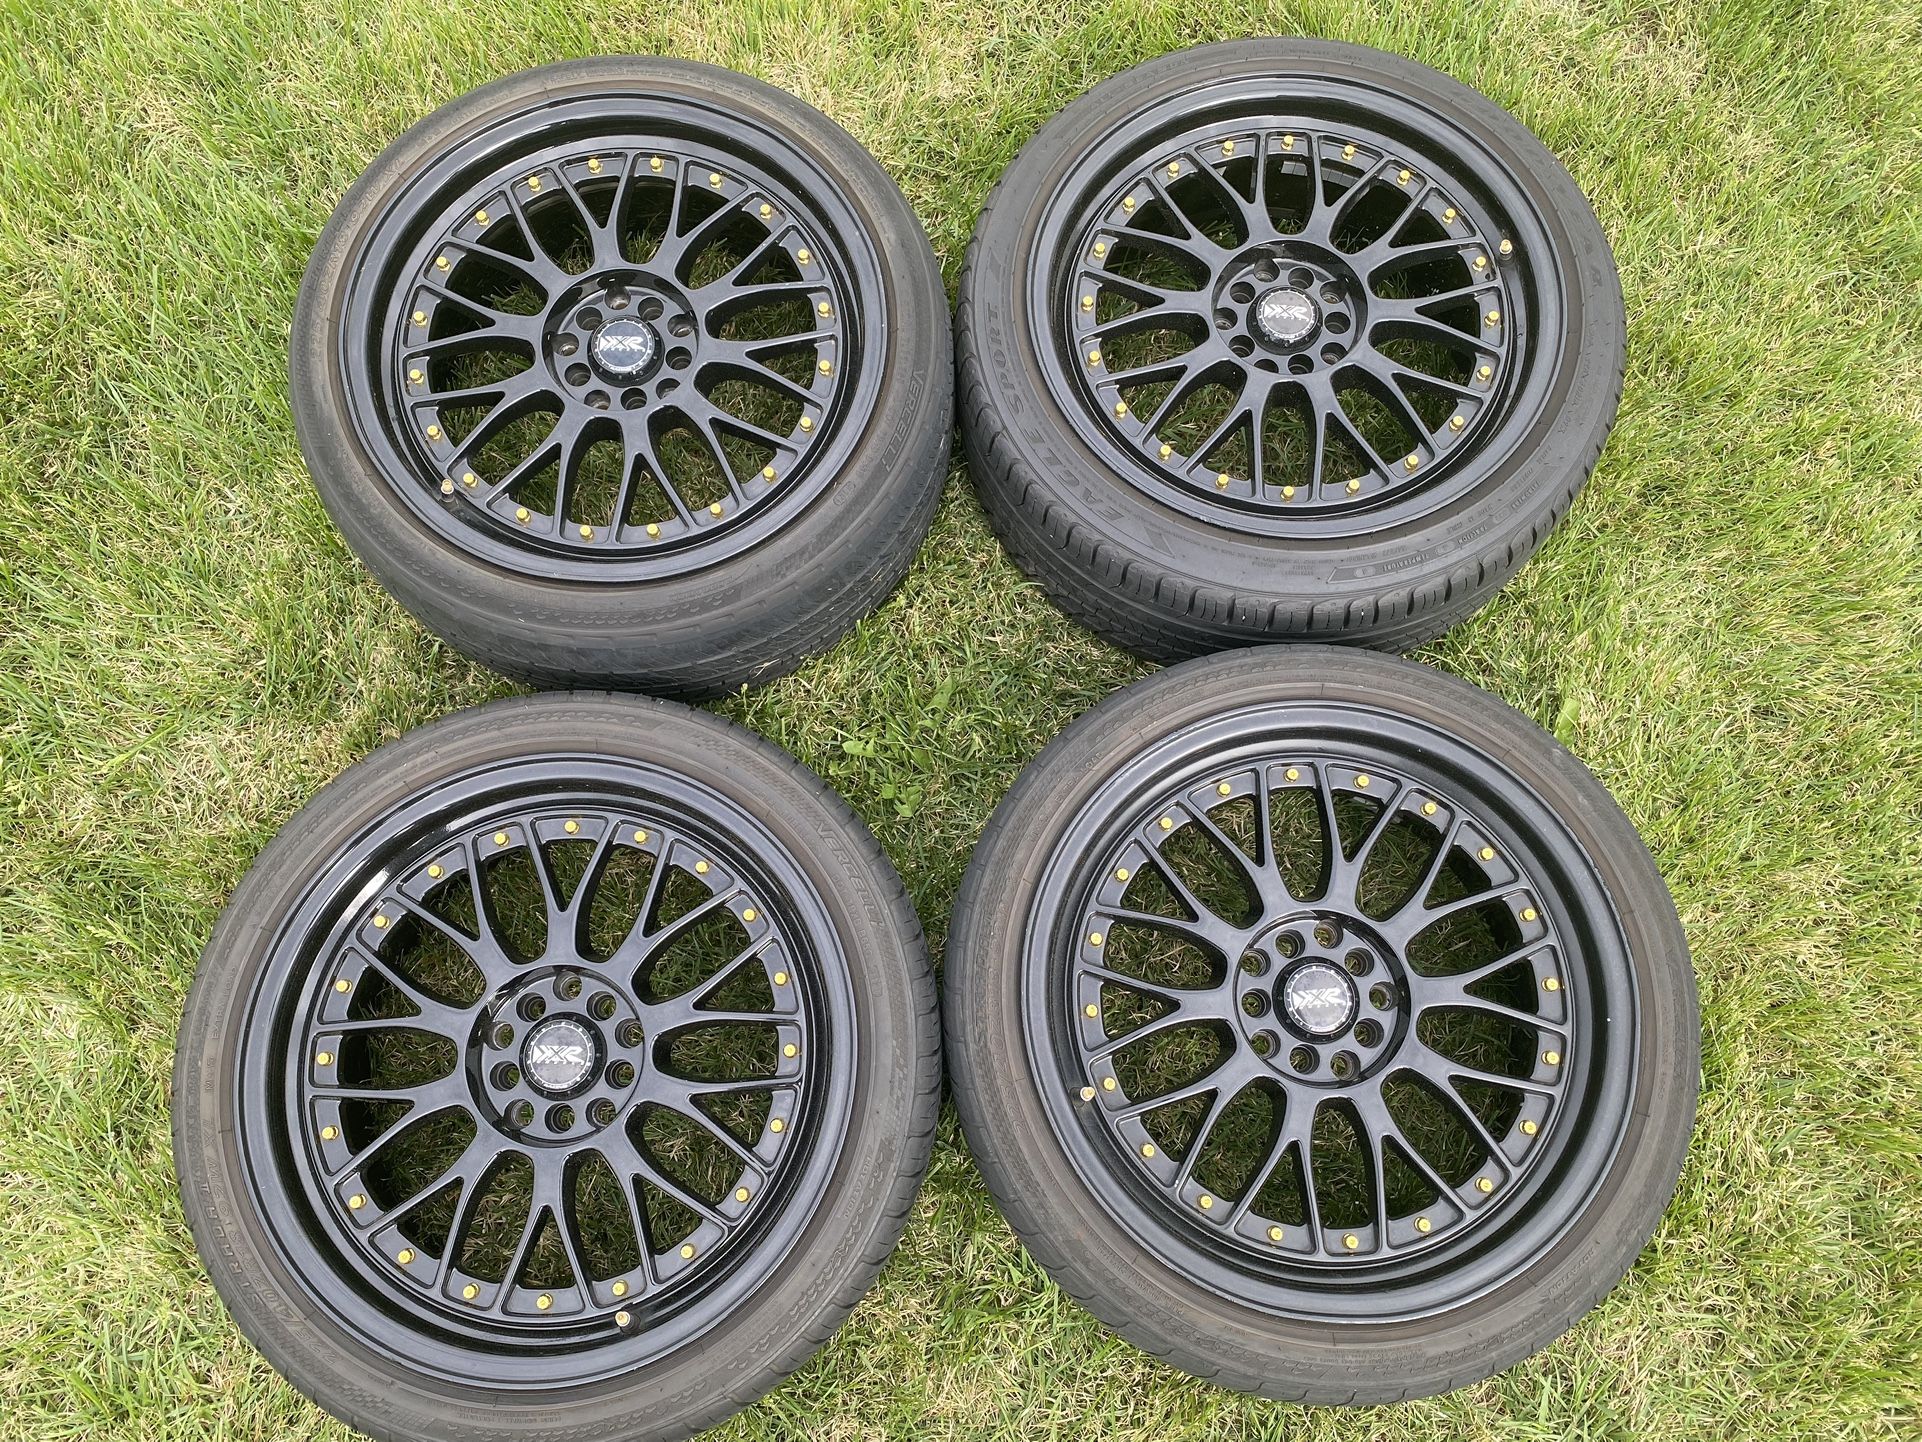 Rims XXR 521 with Tires